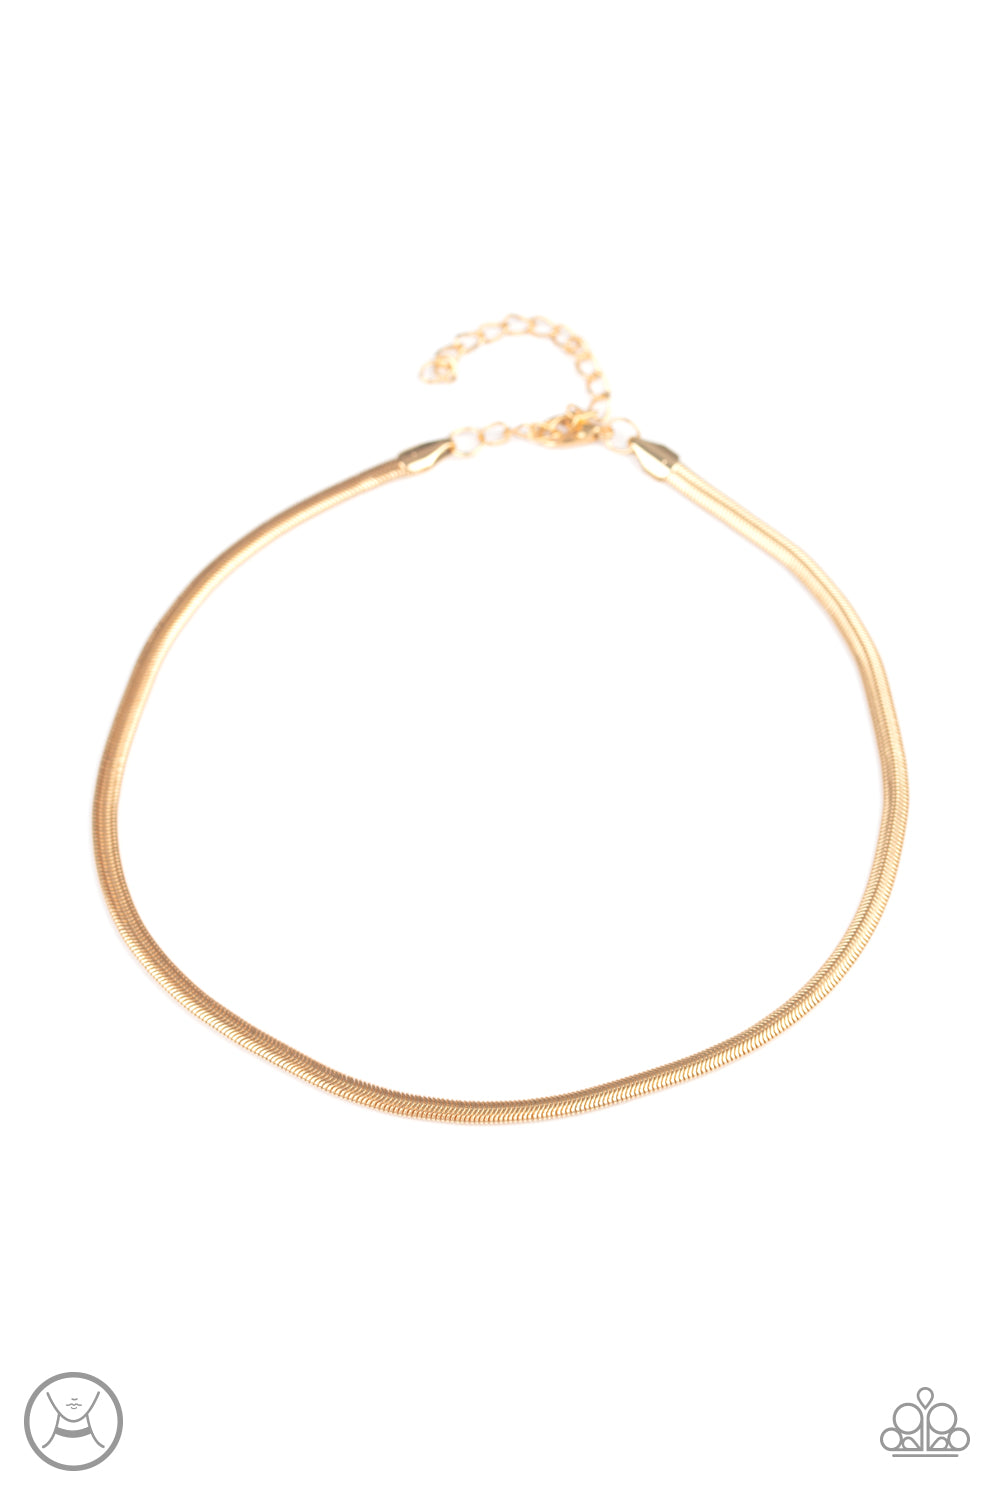 Flat Out Fierce - Gold Choker Necklace Set